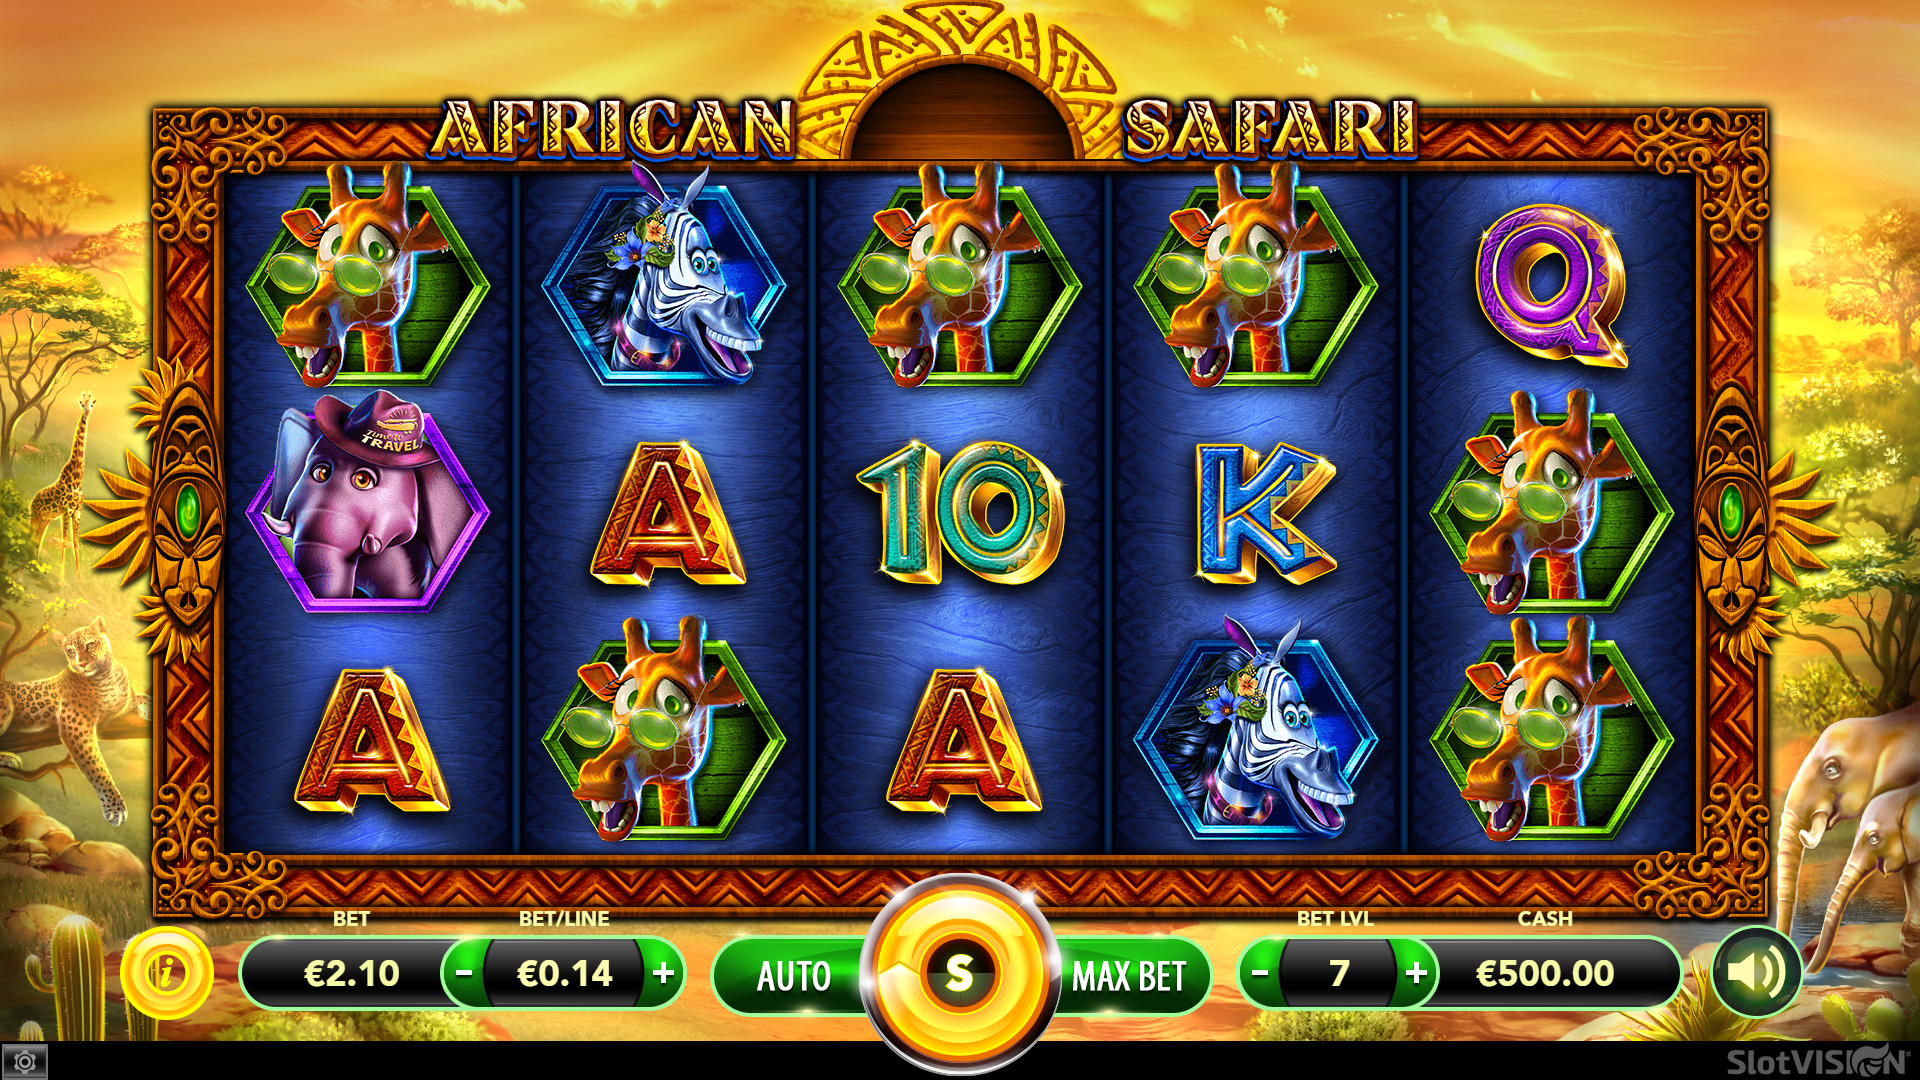 safari games casino